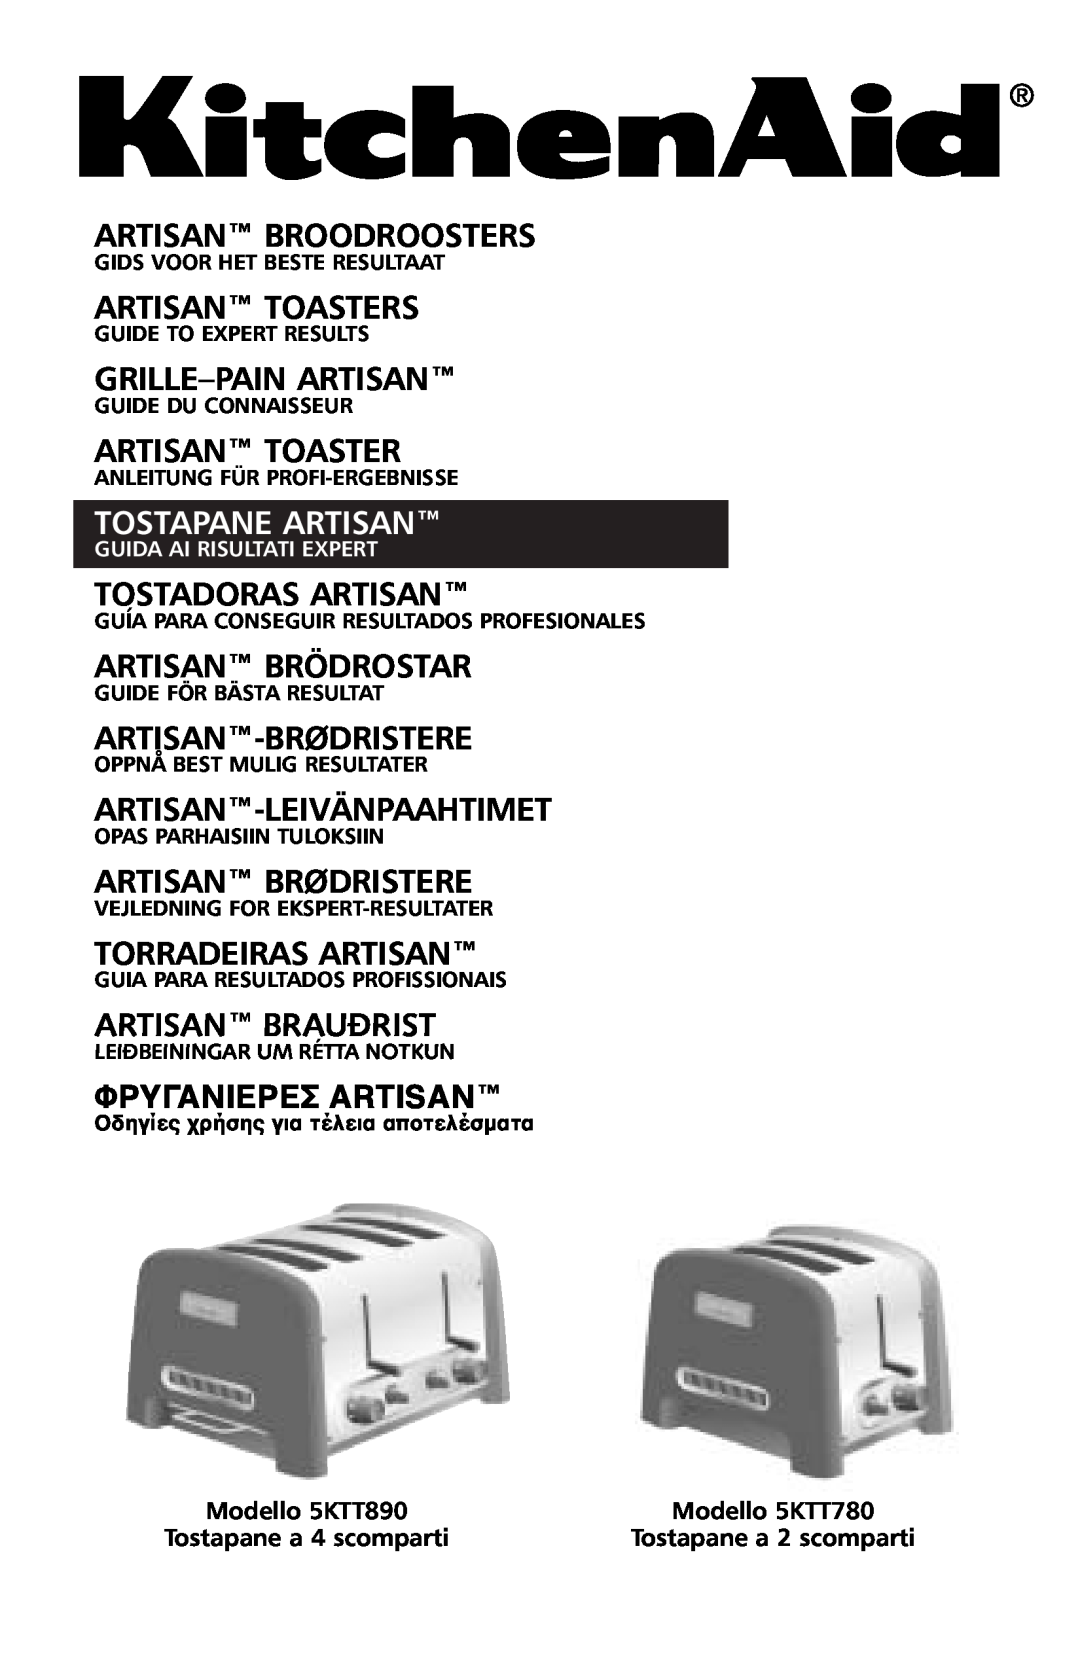 KitchenAid manual Tostapane Artisan, Modello 5KTT890, Modello 5KTT780 